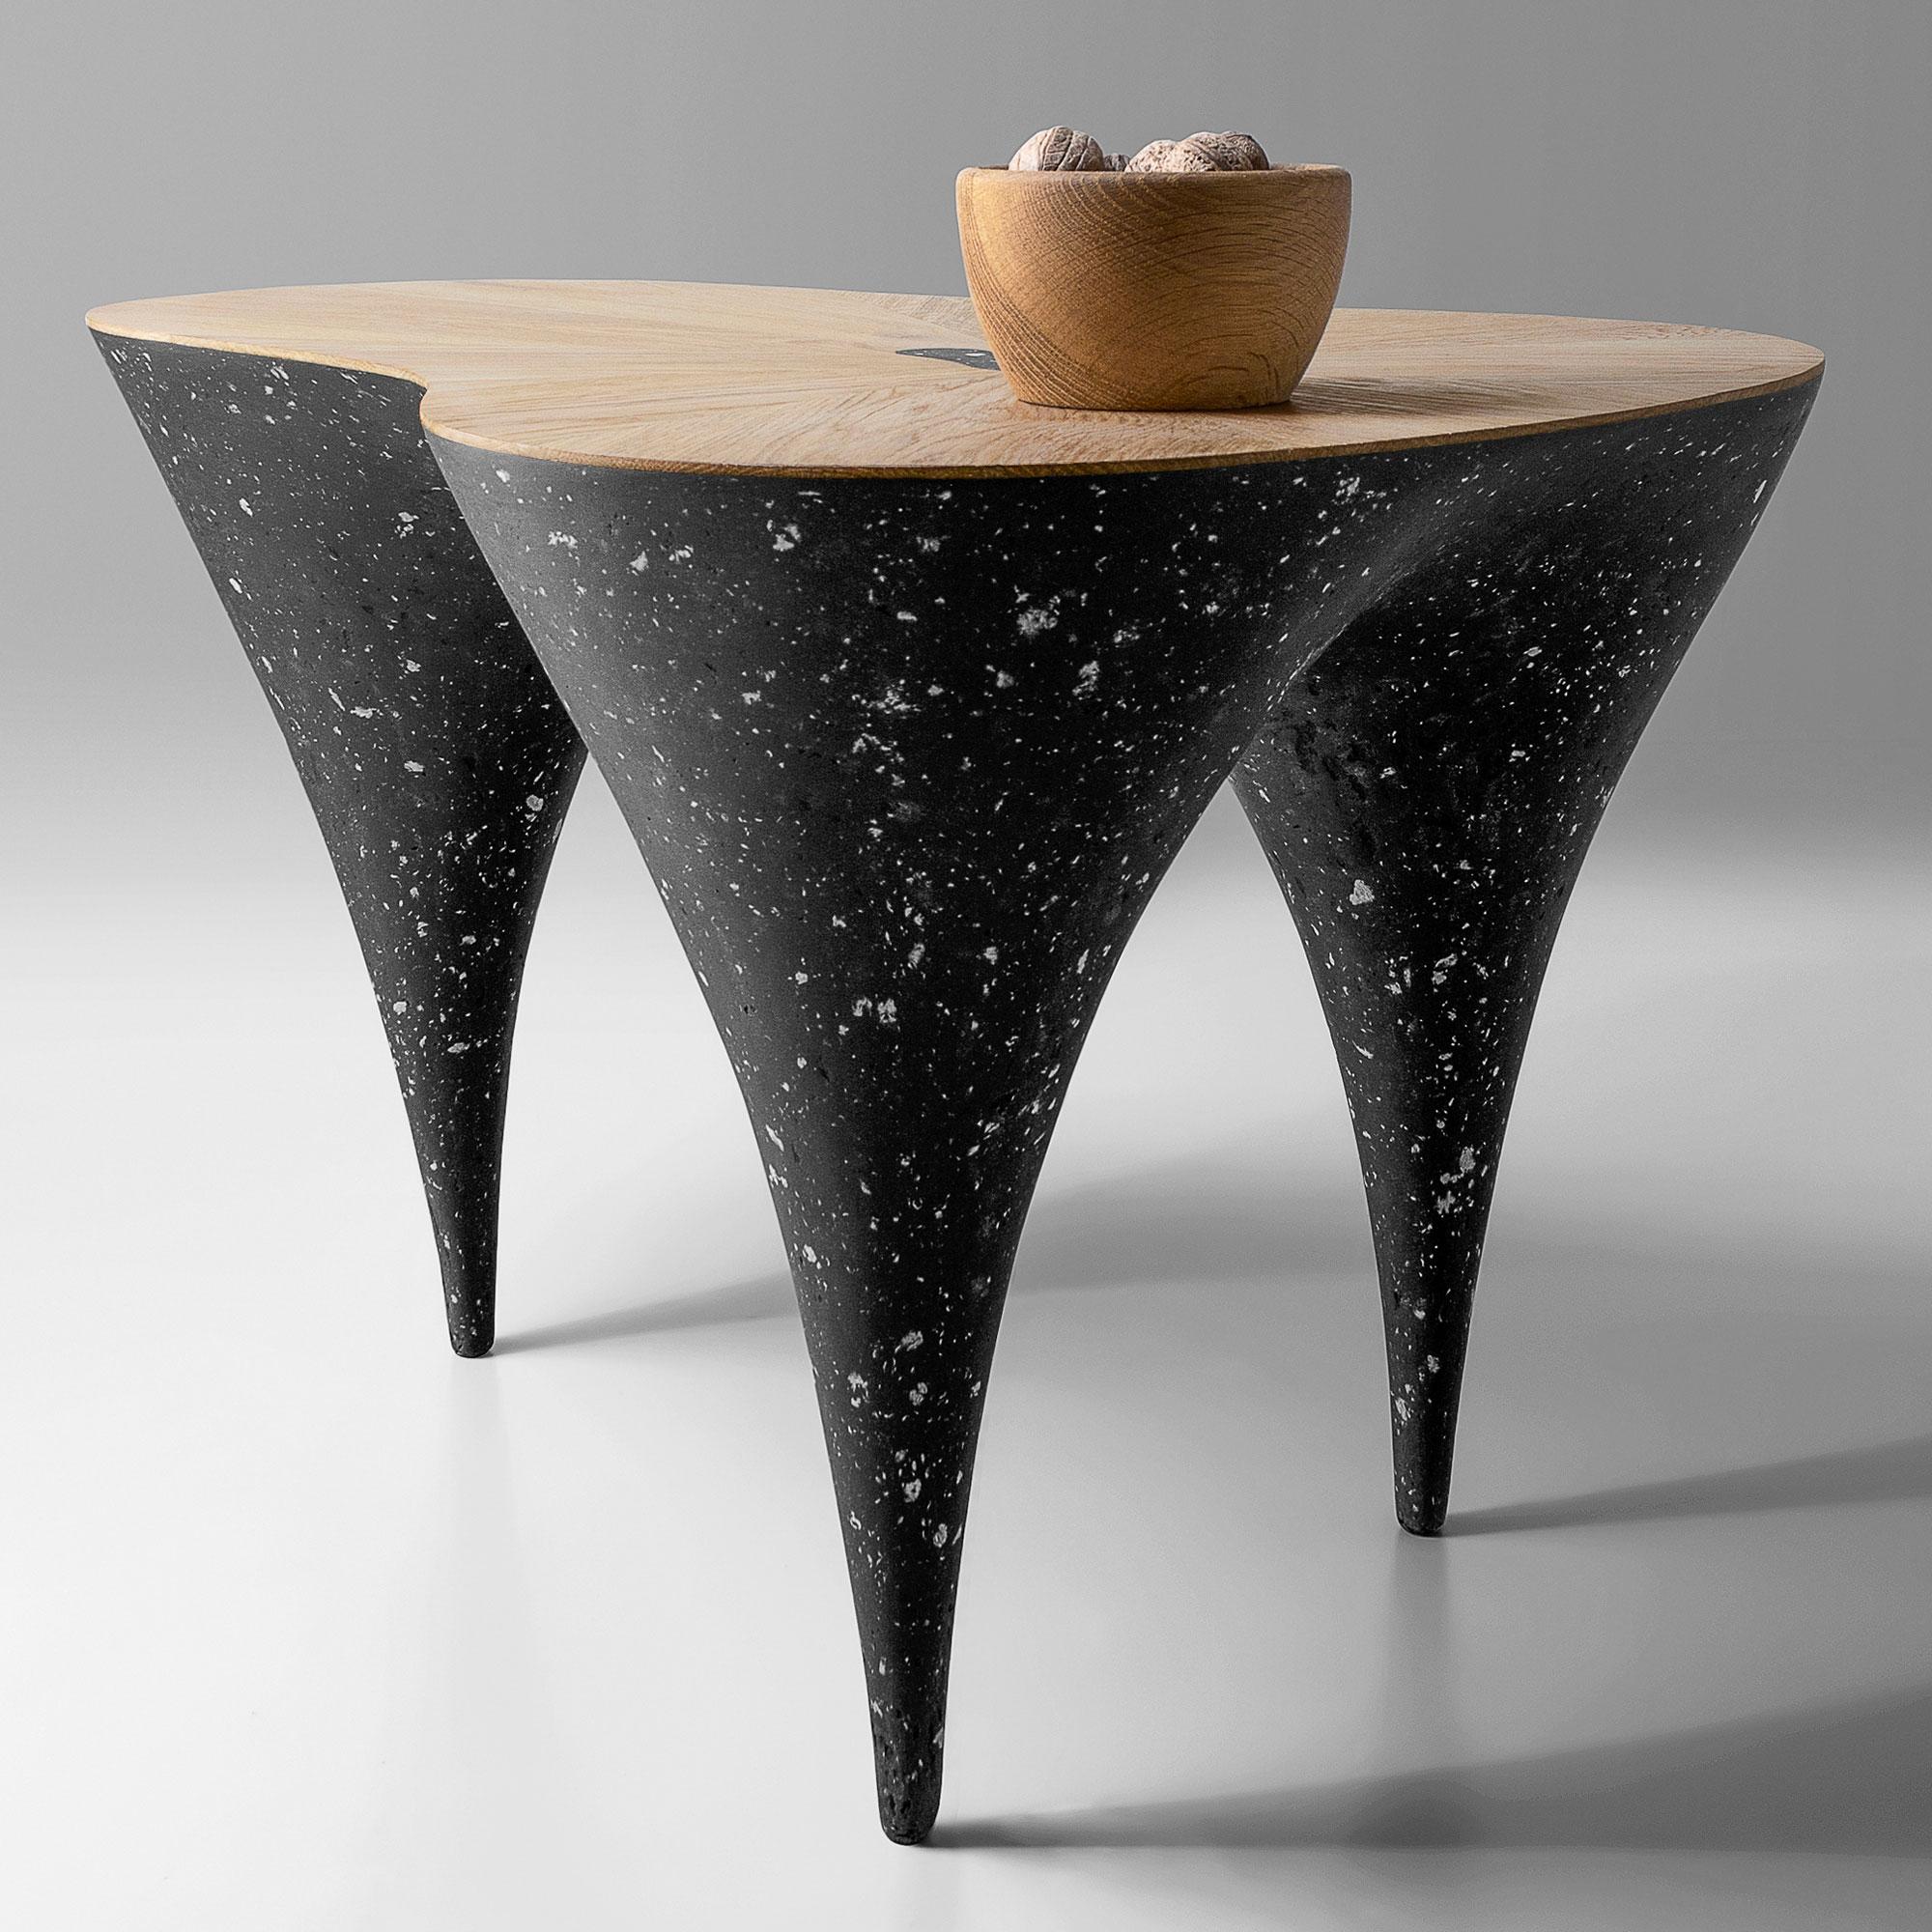 Modern Contemporary Curved Coffee Table, Oak, Black Concrete by Donatas Žukauskas For Sale